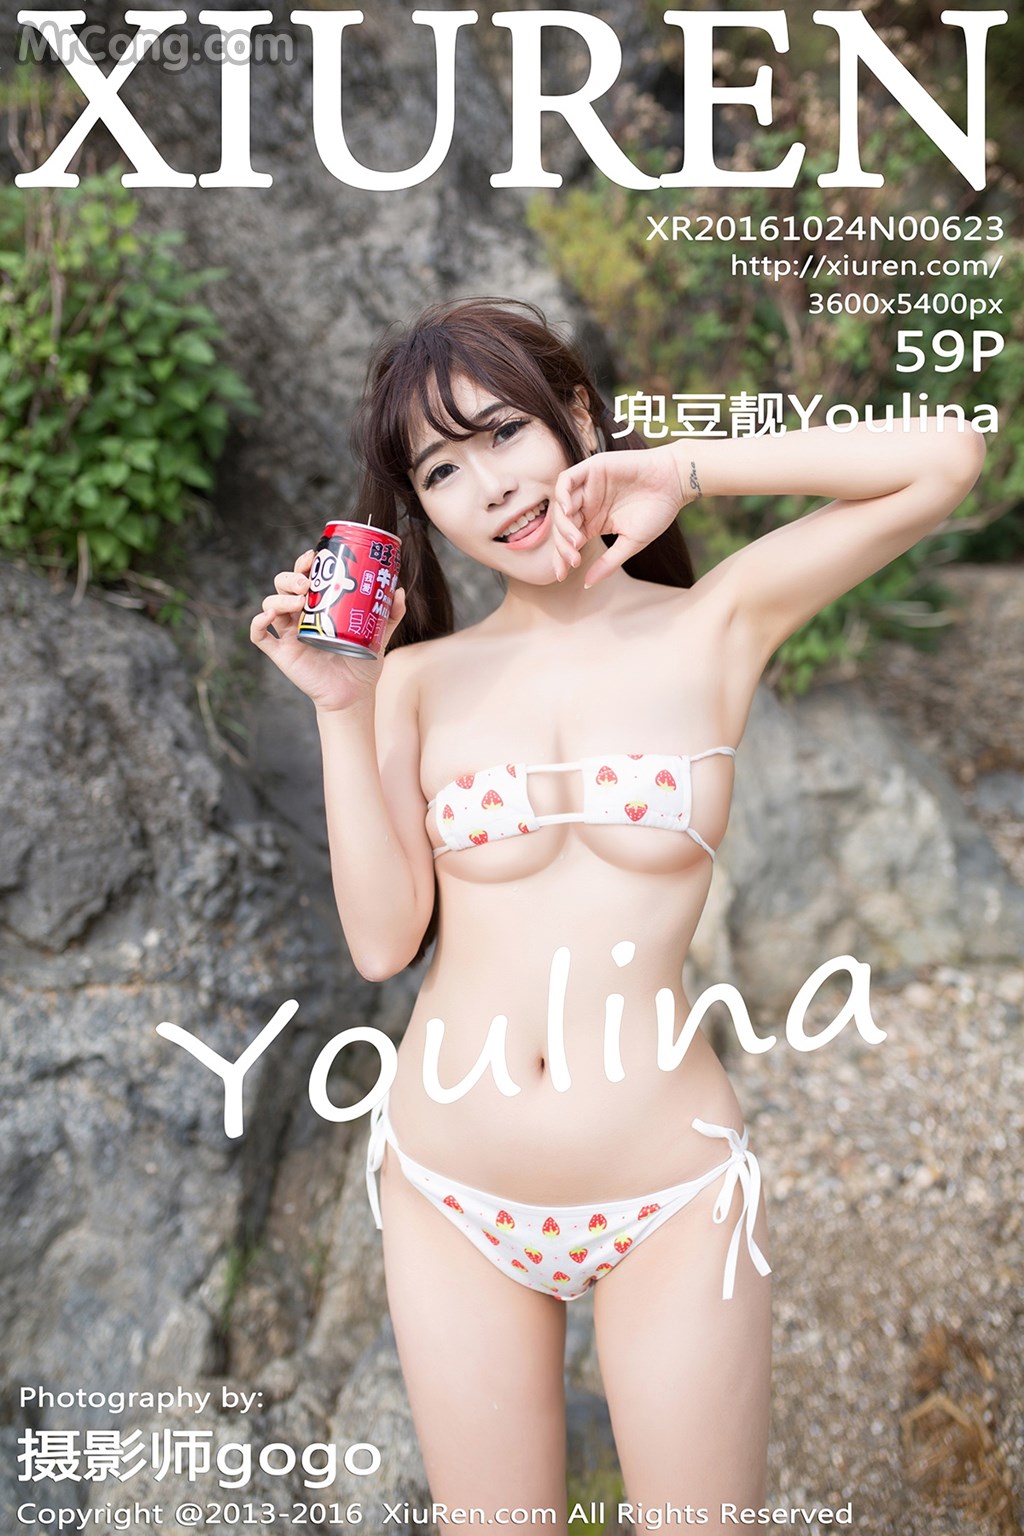 XIUREN No. 683: Model Youlina (兜 豆 靓) (60 photos) photo 1-0